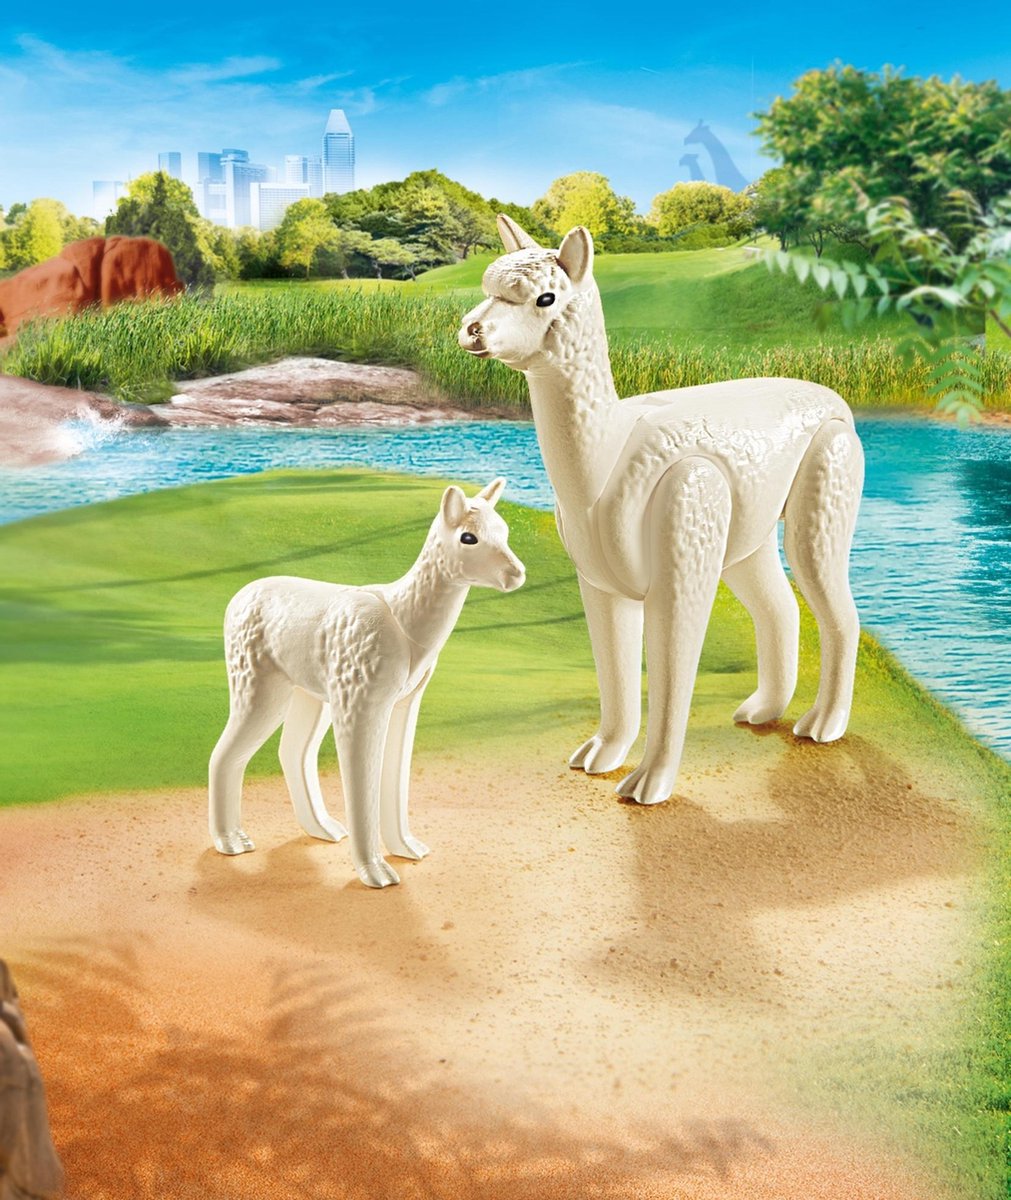 Playmobil Family Fun Alpaca met baby (70350) - Wit